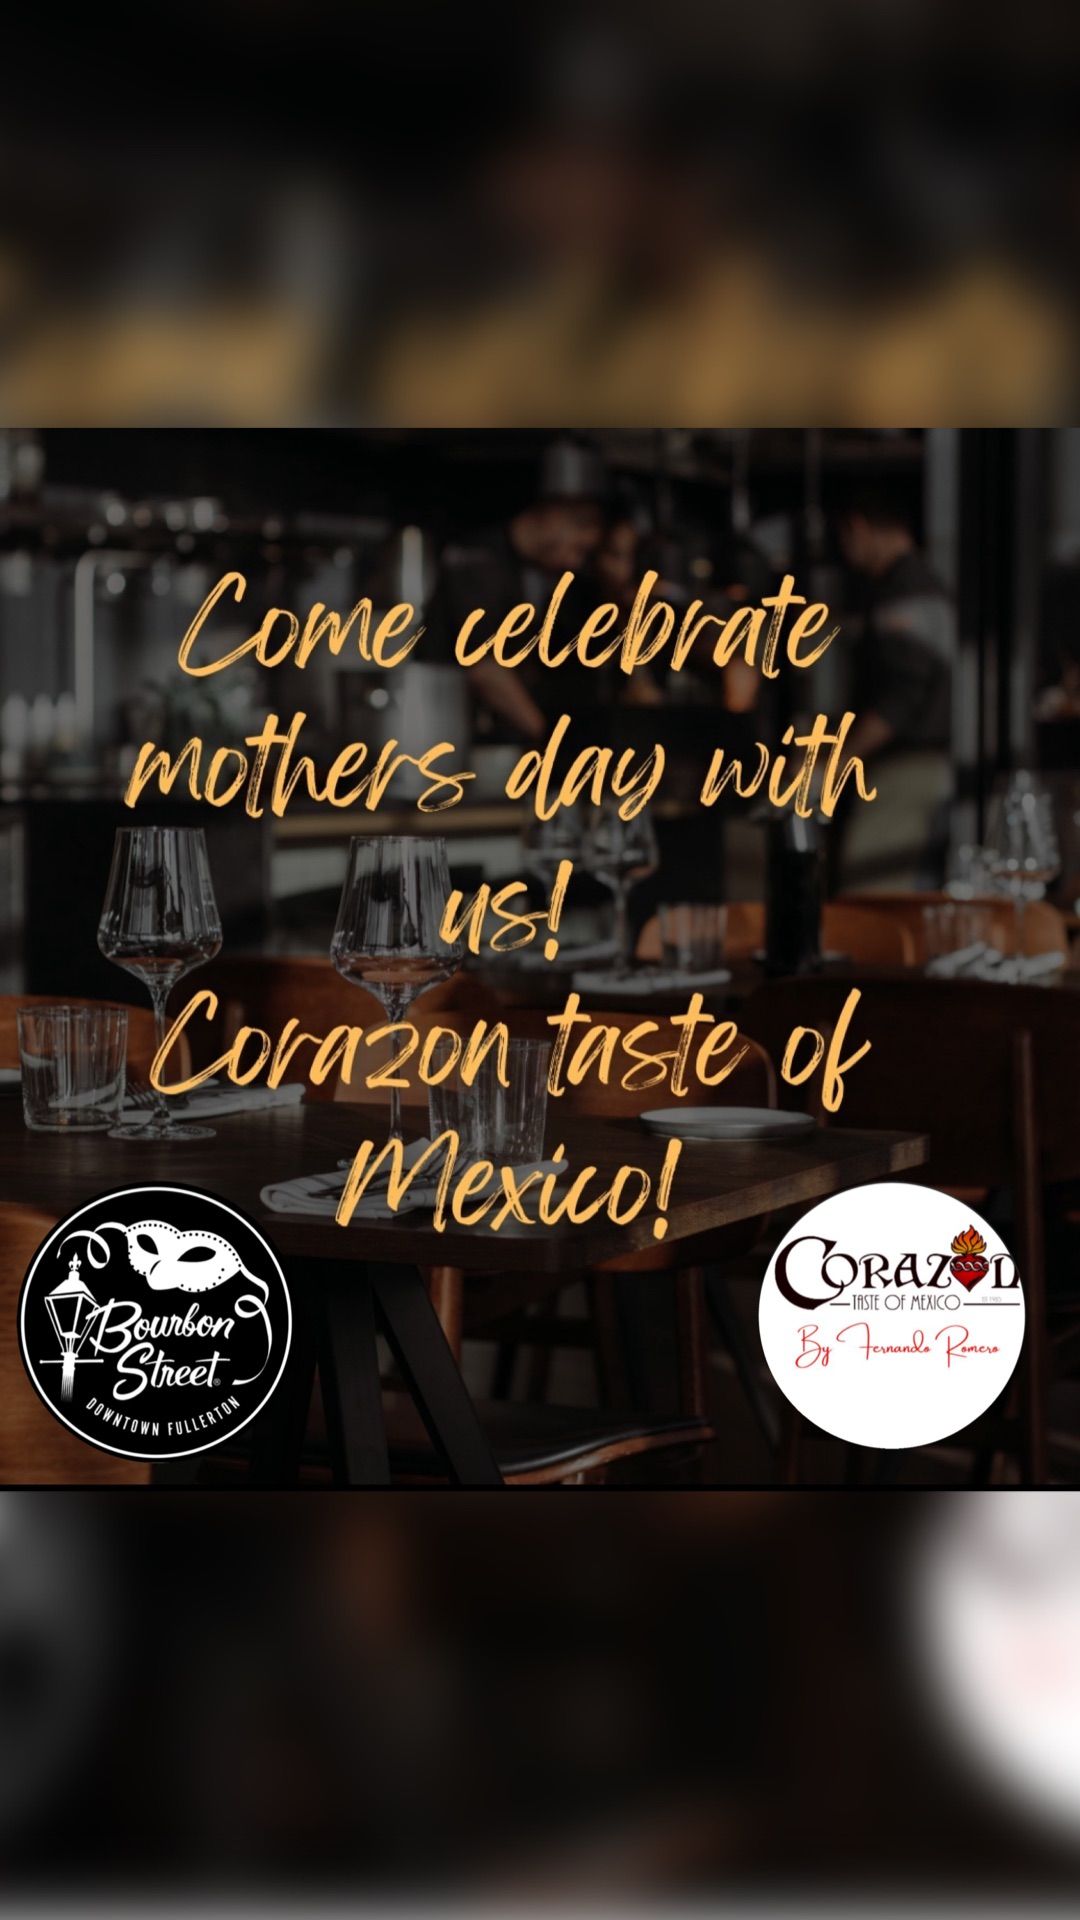 Corazon Taste of Mexico !